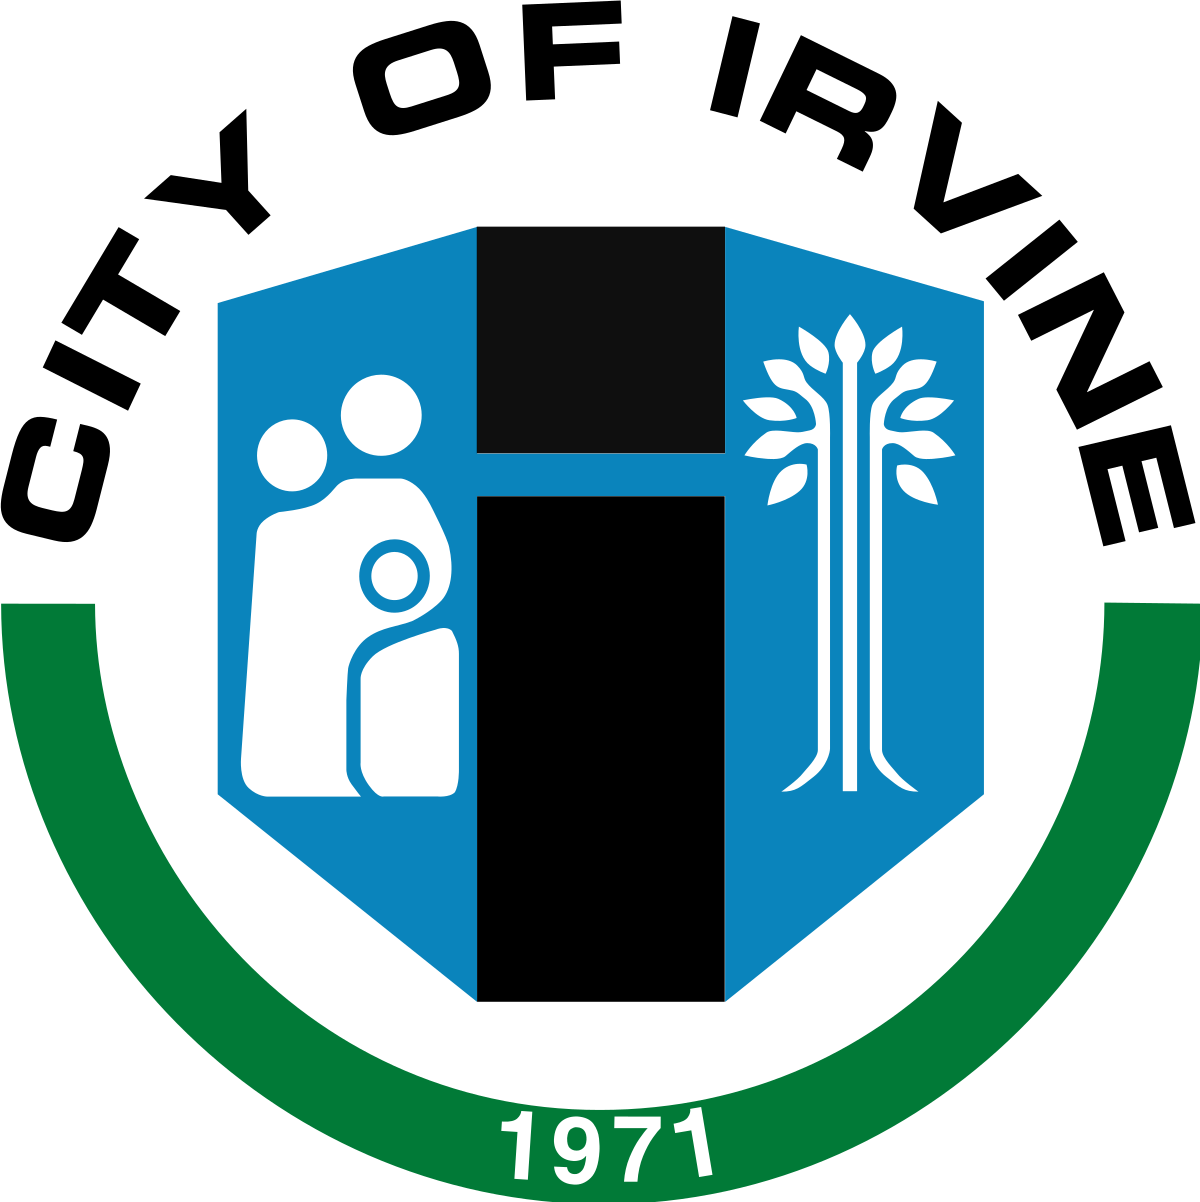 Irvine logo and seal